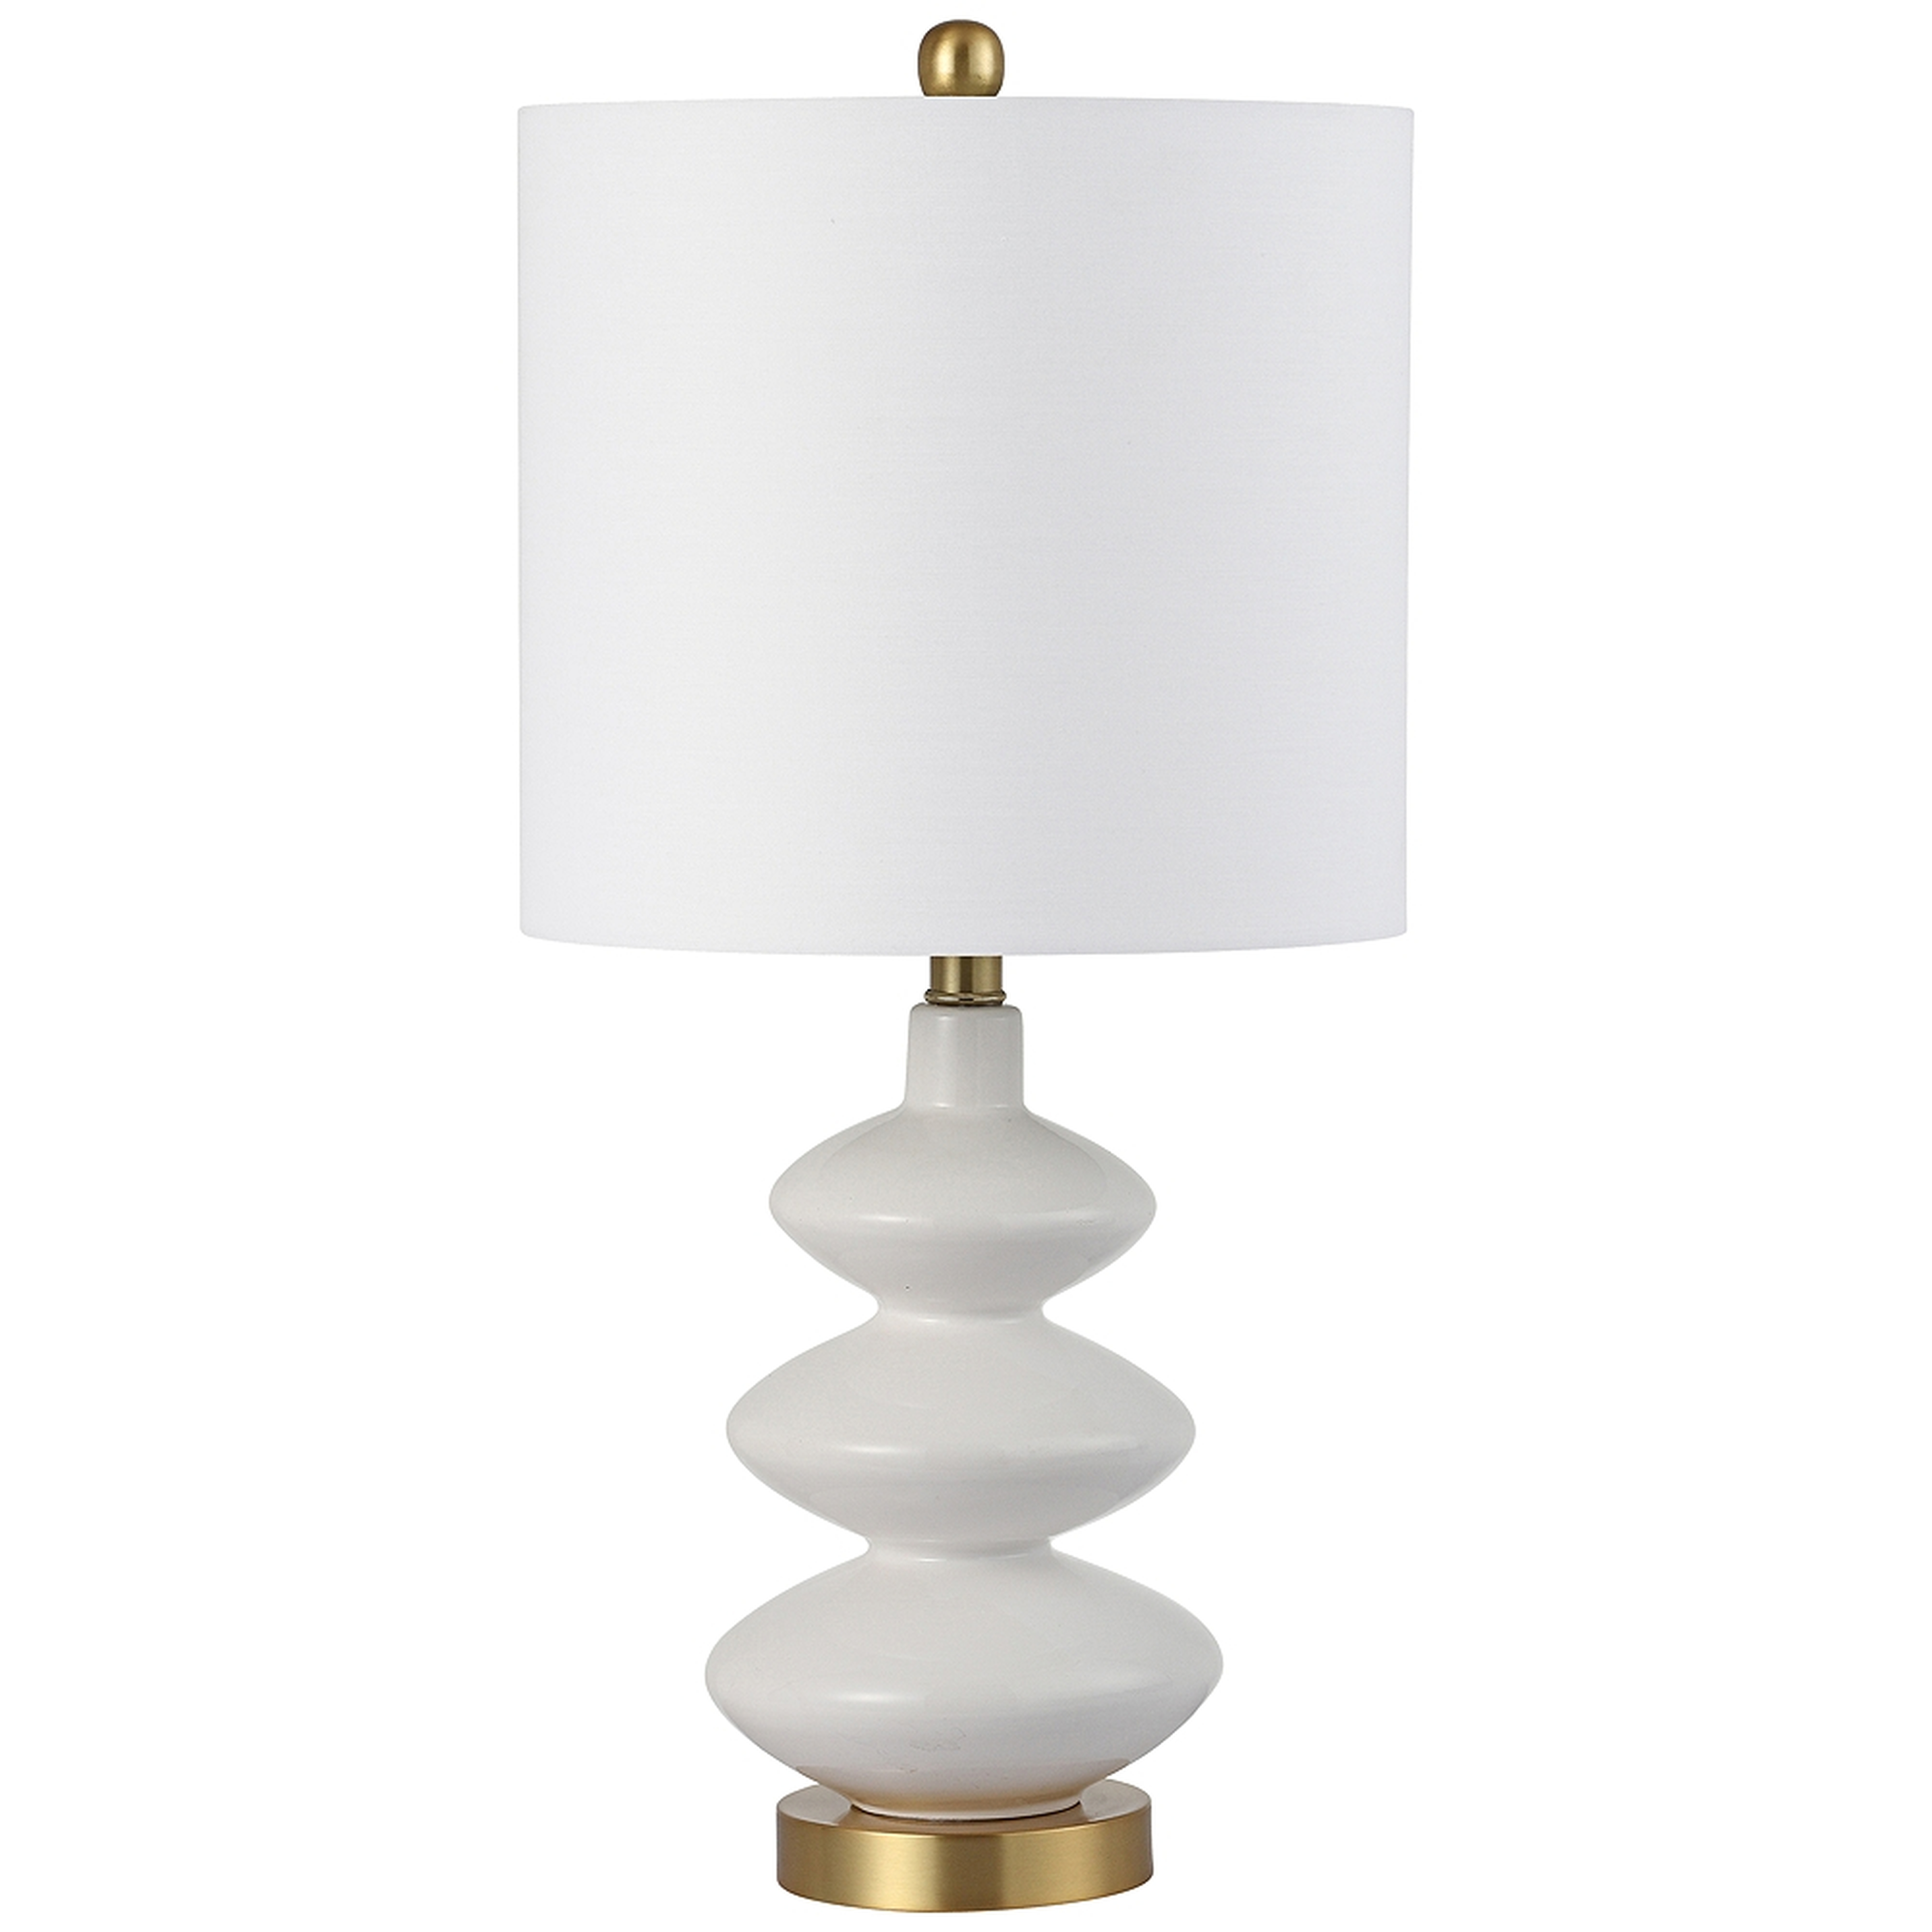 Lasalle White Ceramic Table Lamp - Style # 42F43 - Lamps Plus